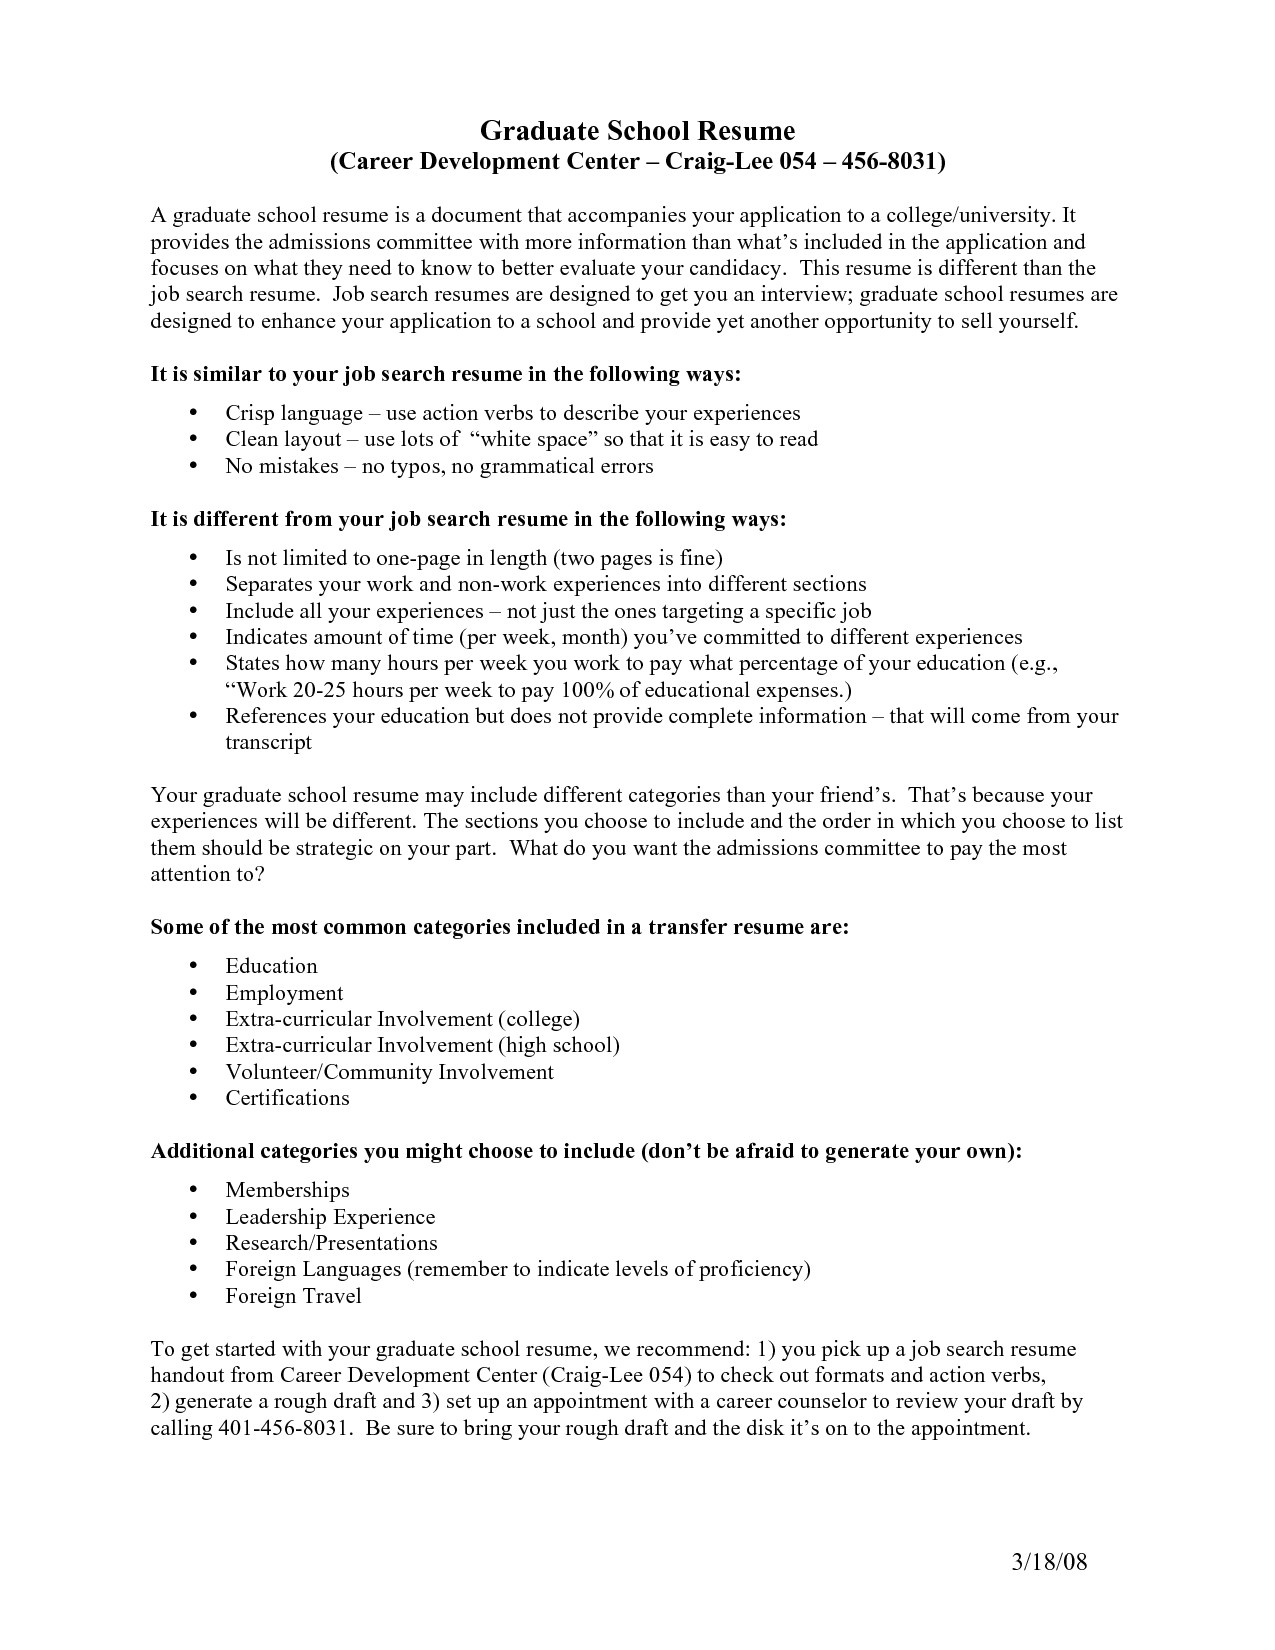 resume for graduate school template